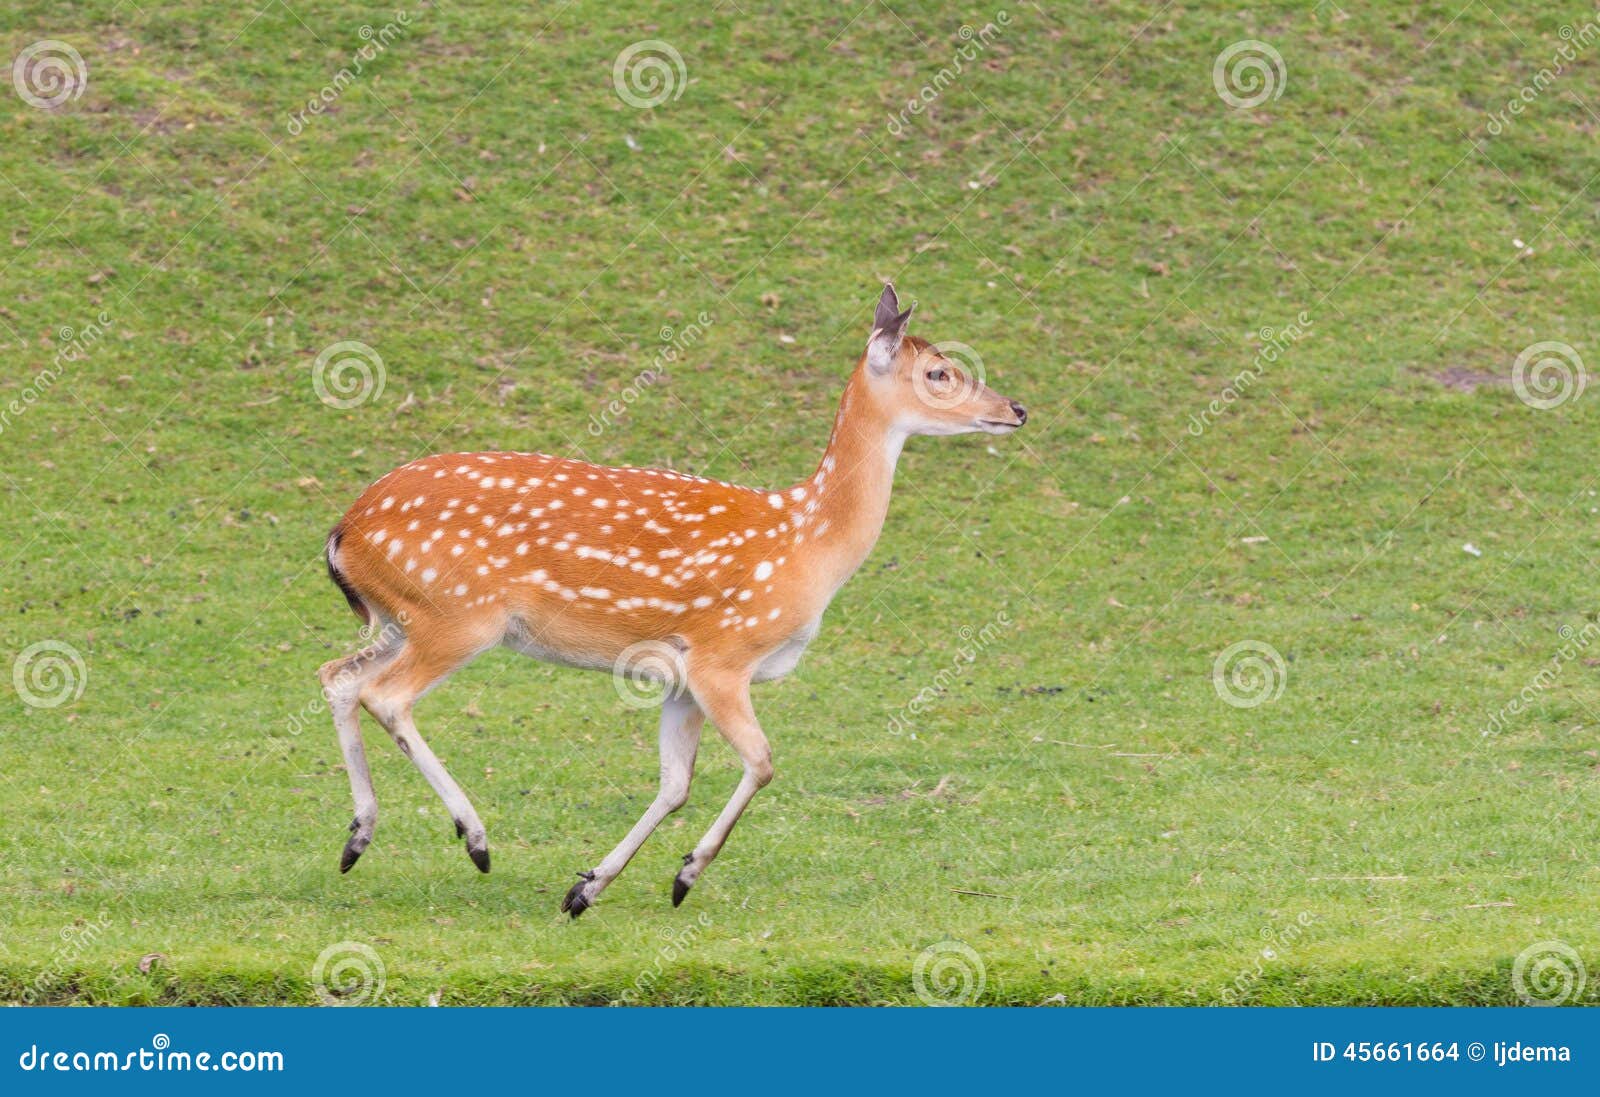 sika deer (cervus nippon) running